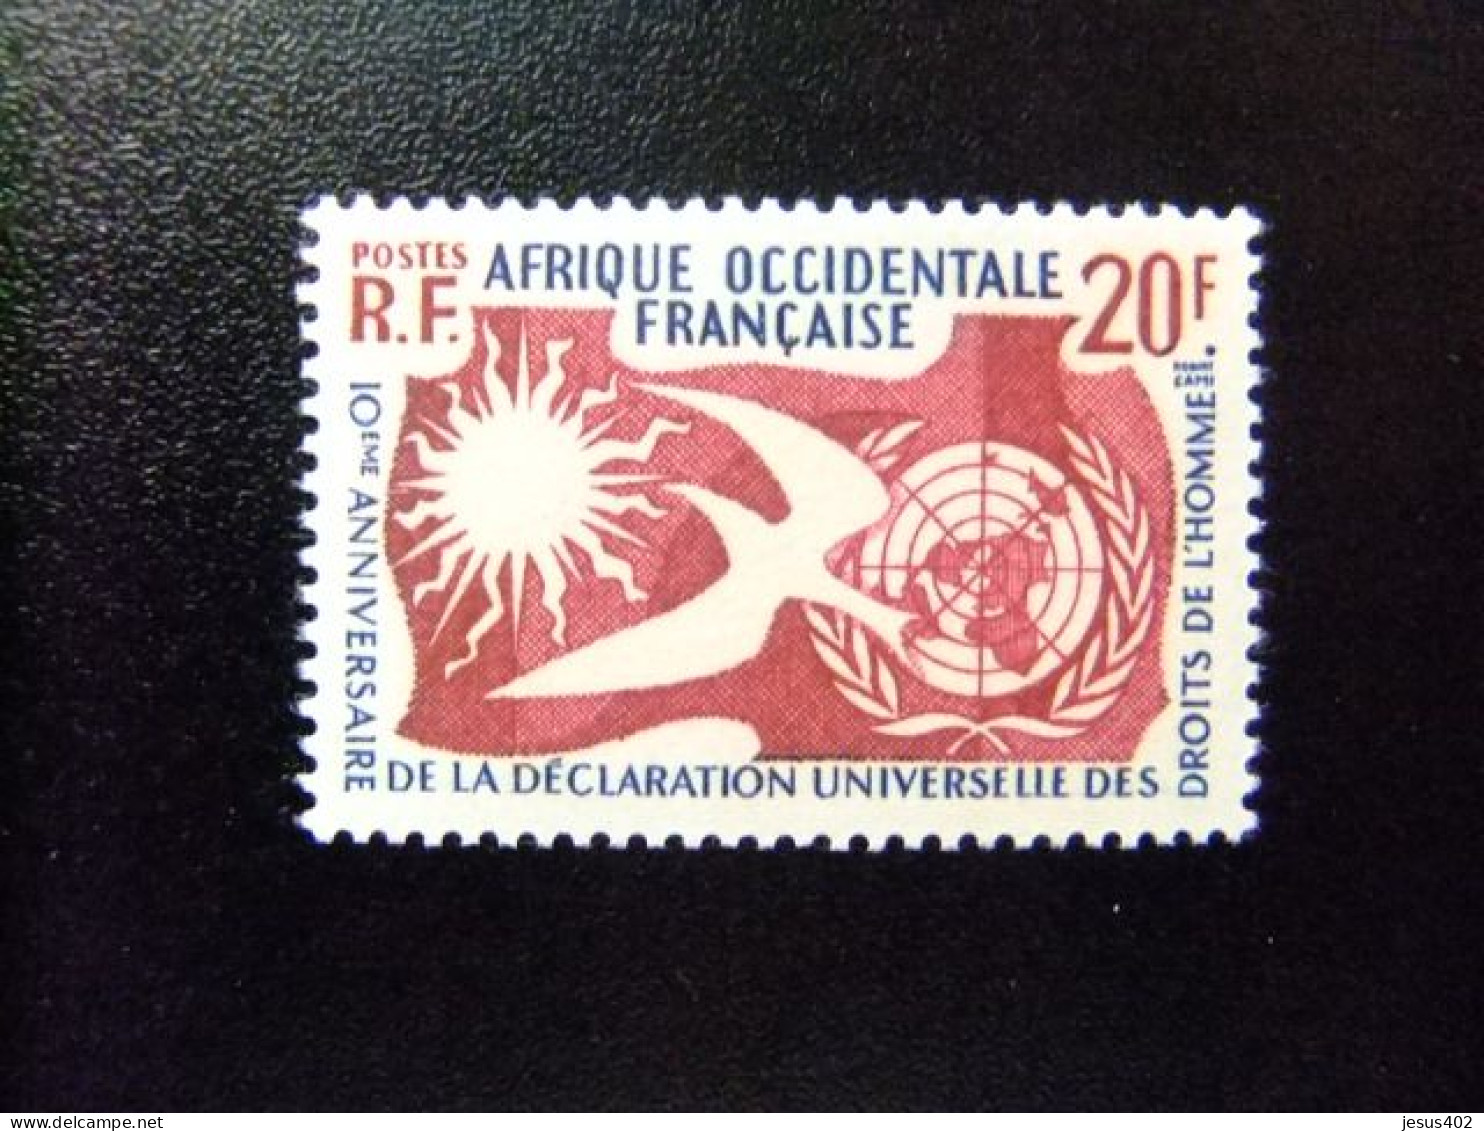 56 AFRIQUE OCCIDENTALE FRANCAISE (A.O.F.) 1958 / O.N.U. / YVERT 74 MNH - Nuevos